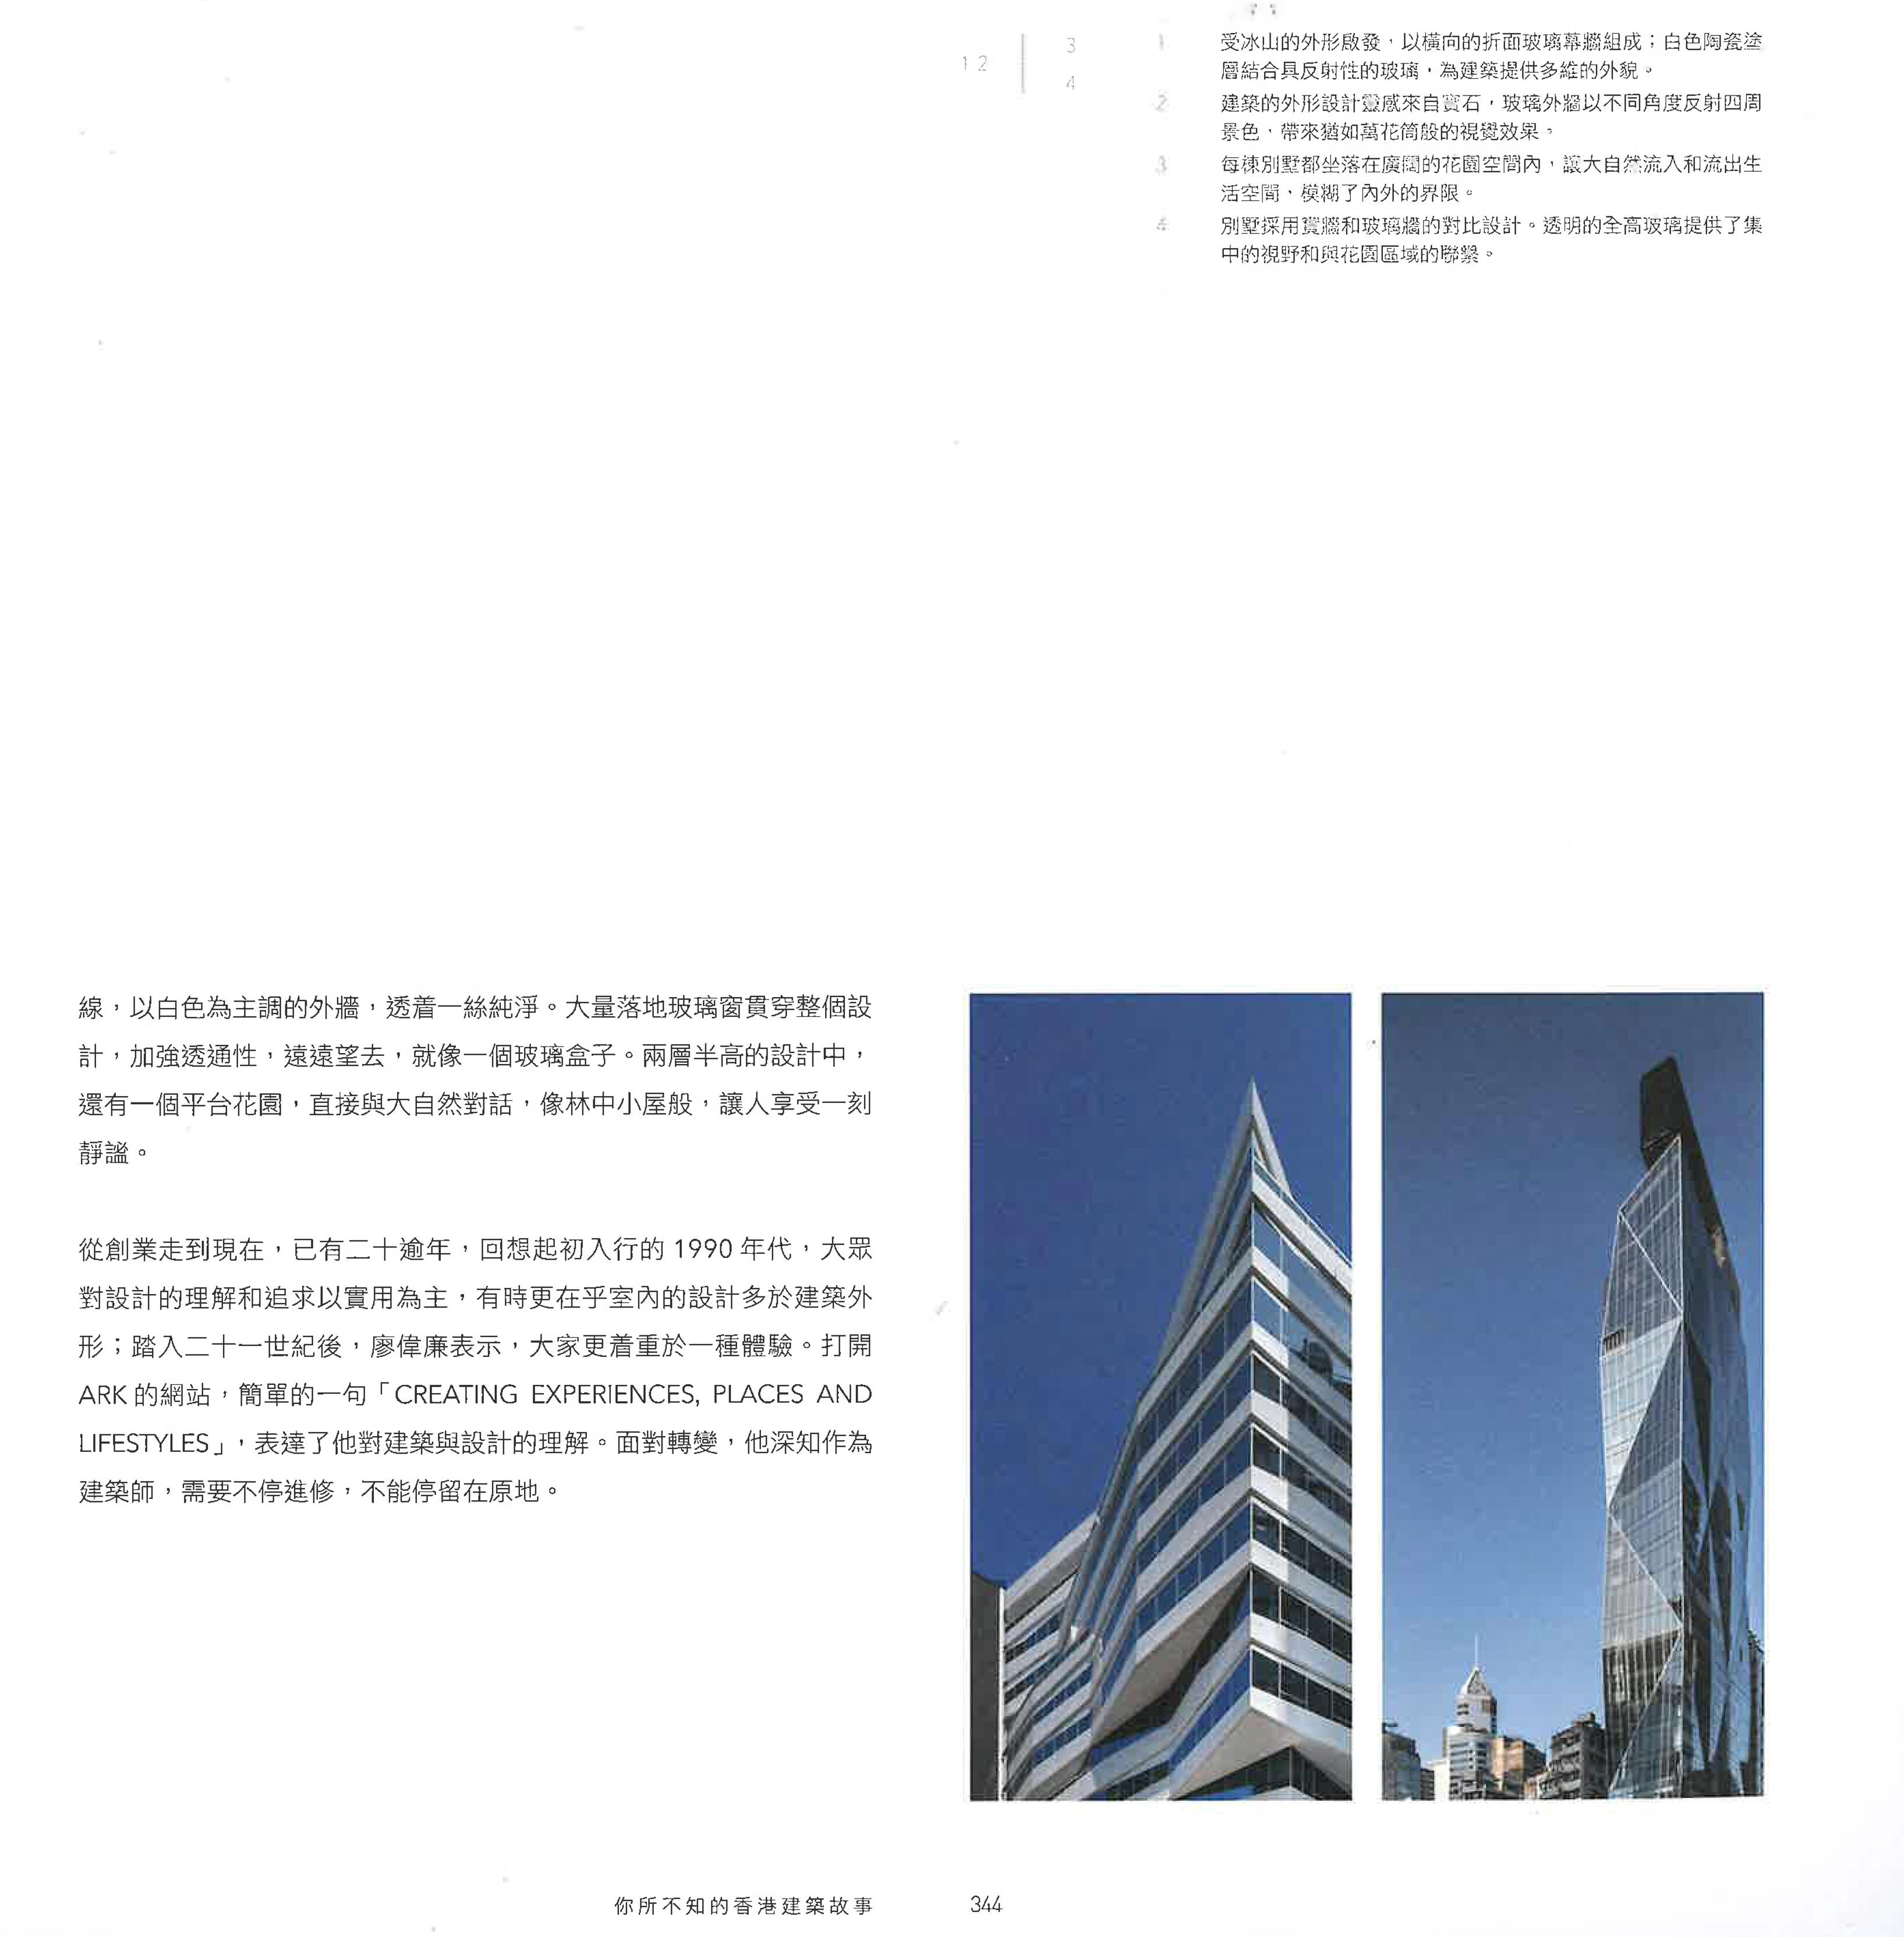 Publication of ‘Unsung Hong Kong Architecture’ 《你所不知的香港建築故事》